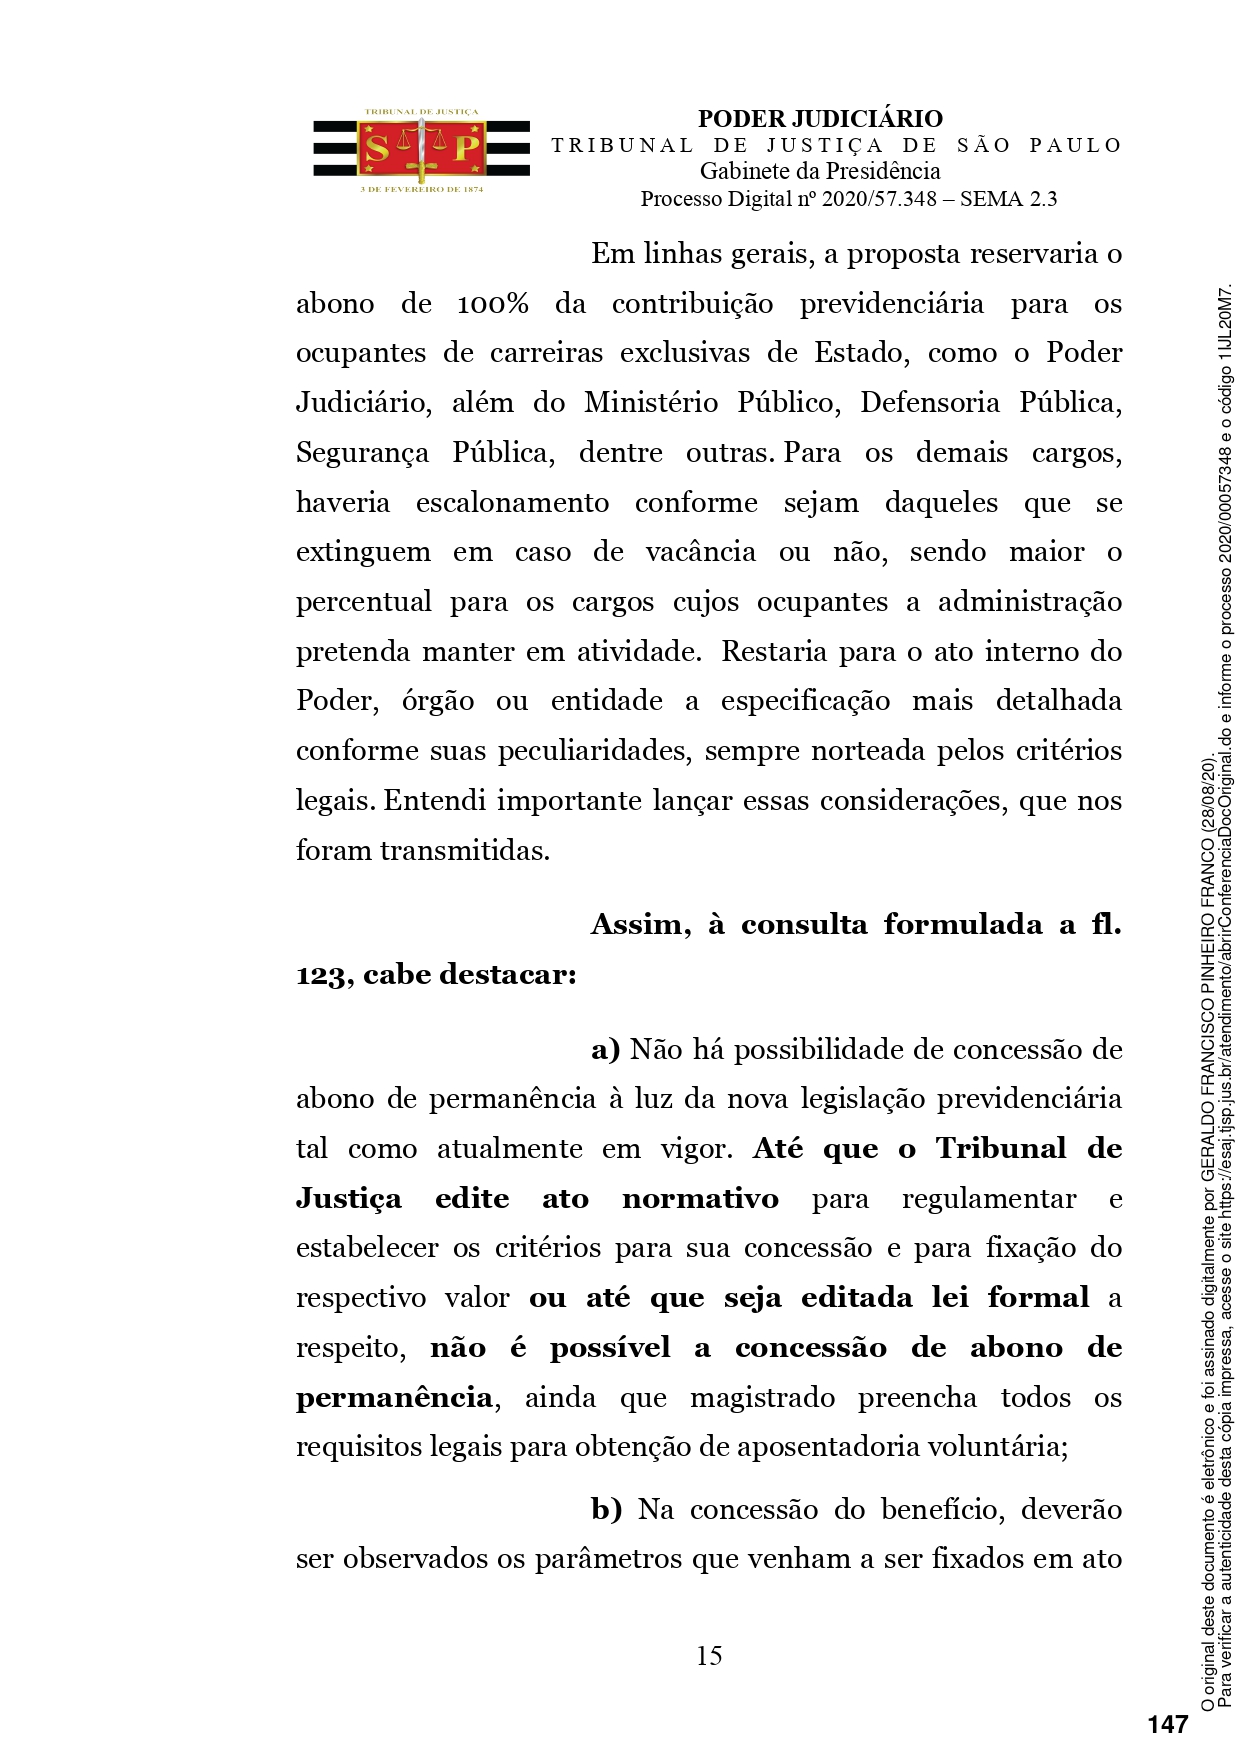 reforma-previdencia-tj-sp_page-0015.jpg